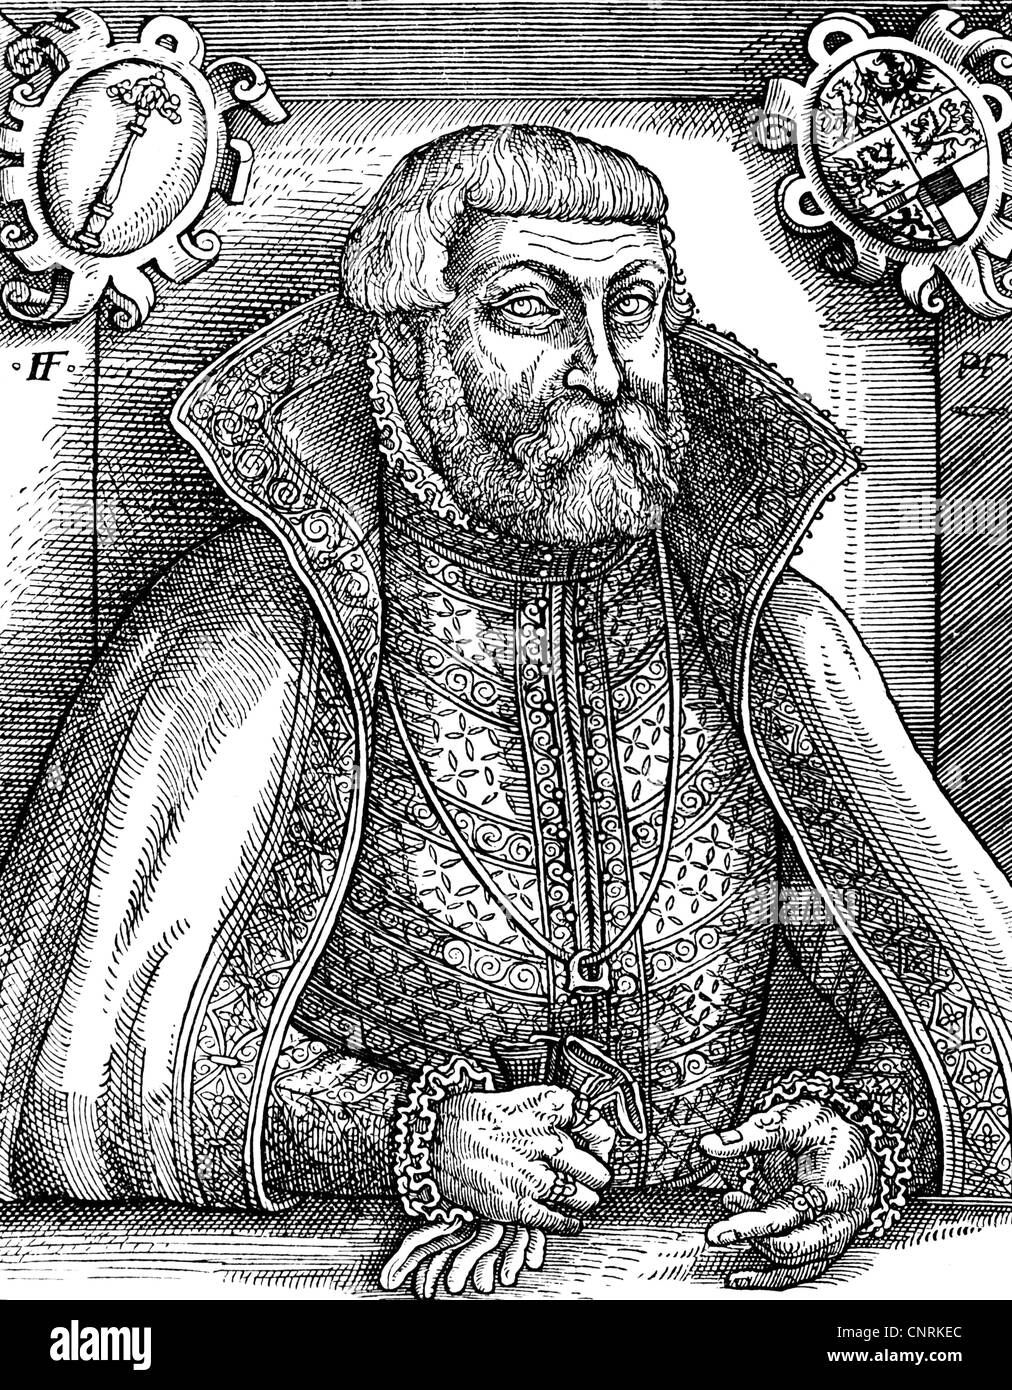 John George, 11.9.1525 - 8.1.1598, Elector of Brandenburg 3.1.1571 - 8.1.1598, half length, woodcut, 16th century, Stock Photo